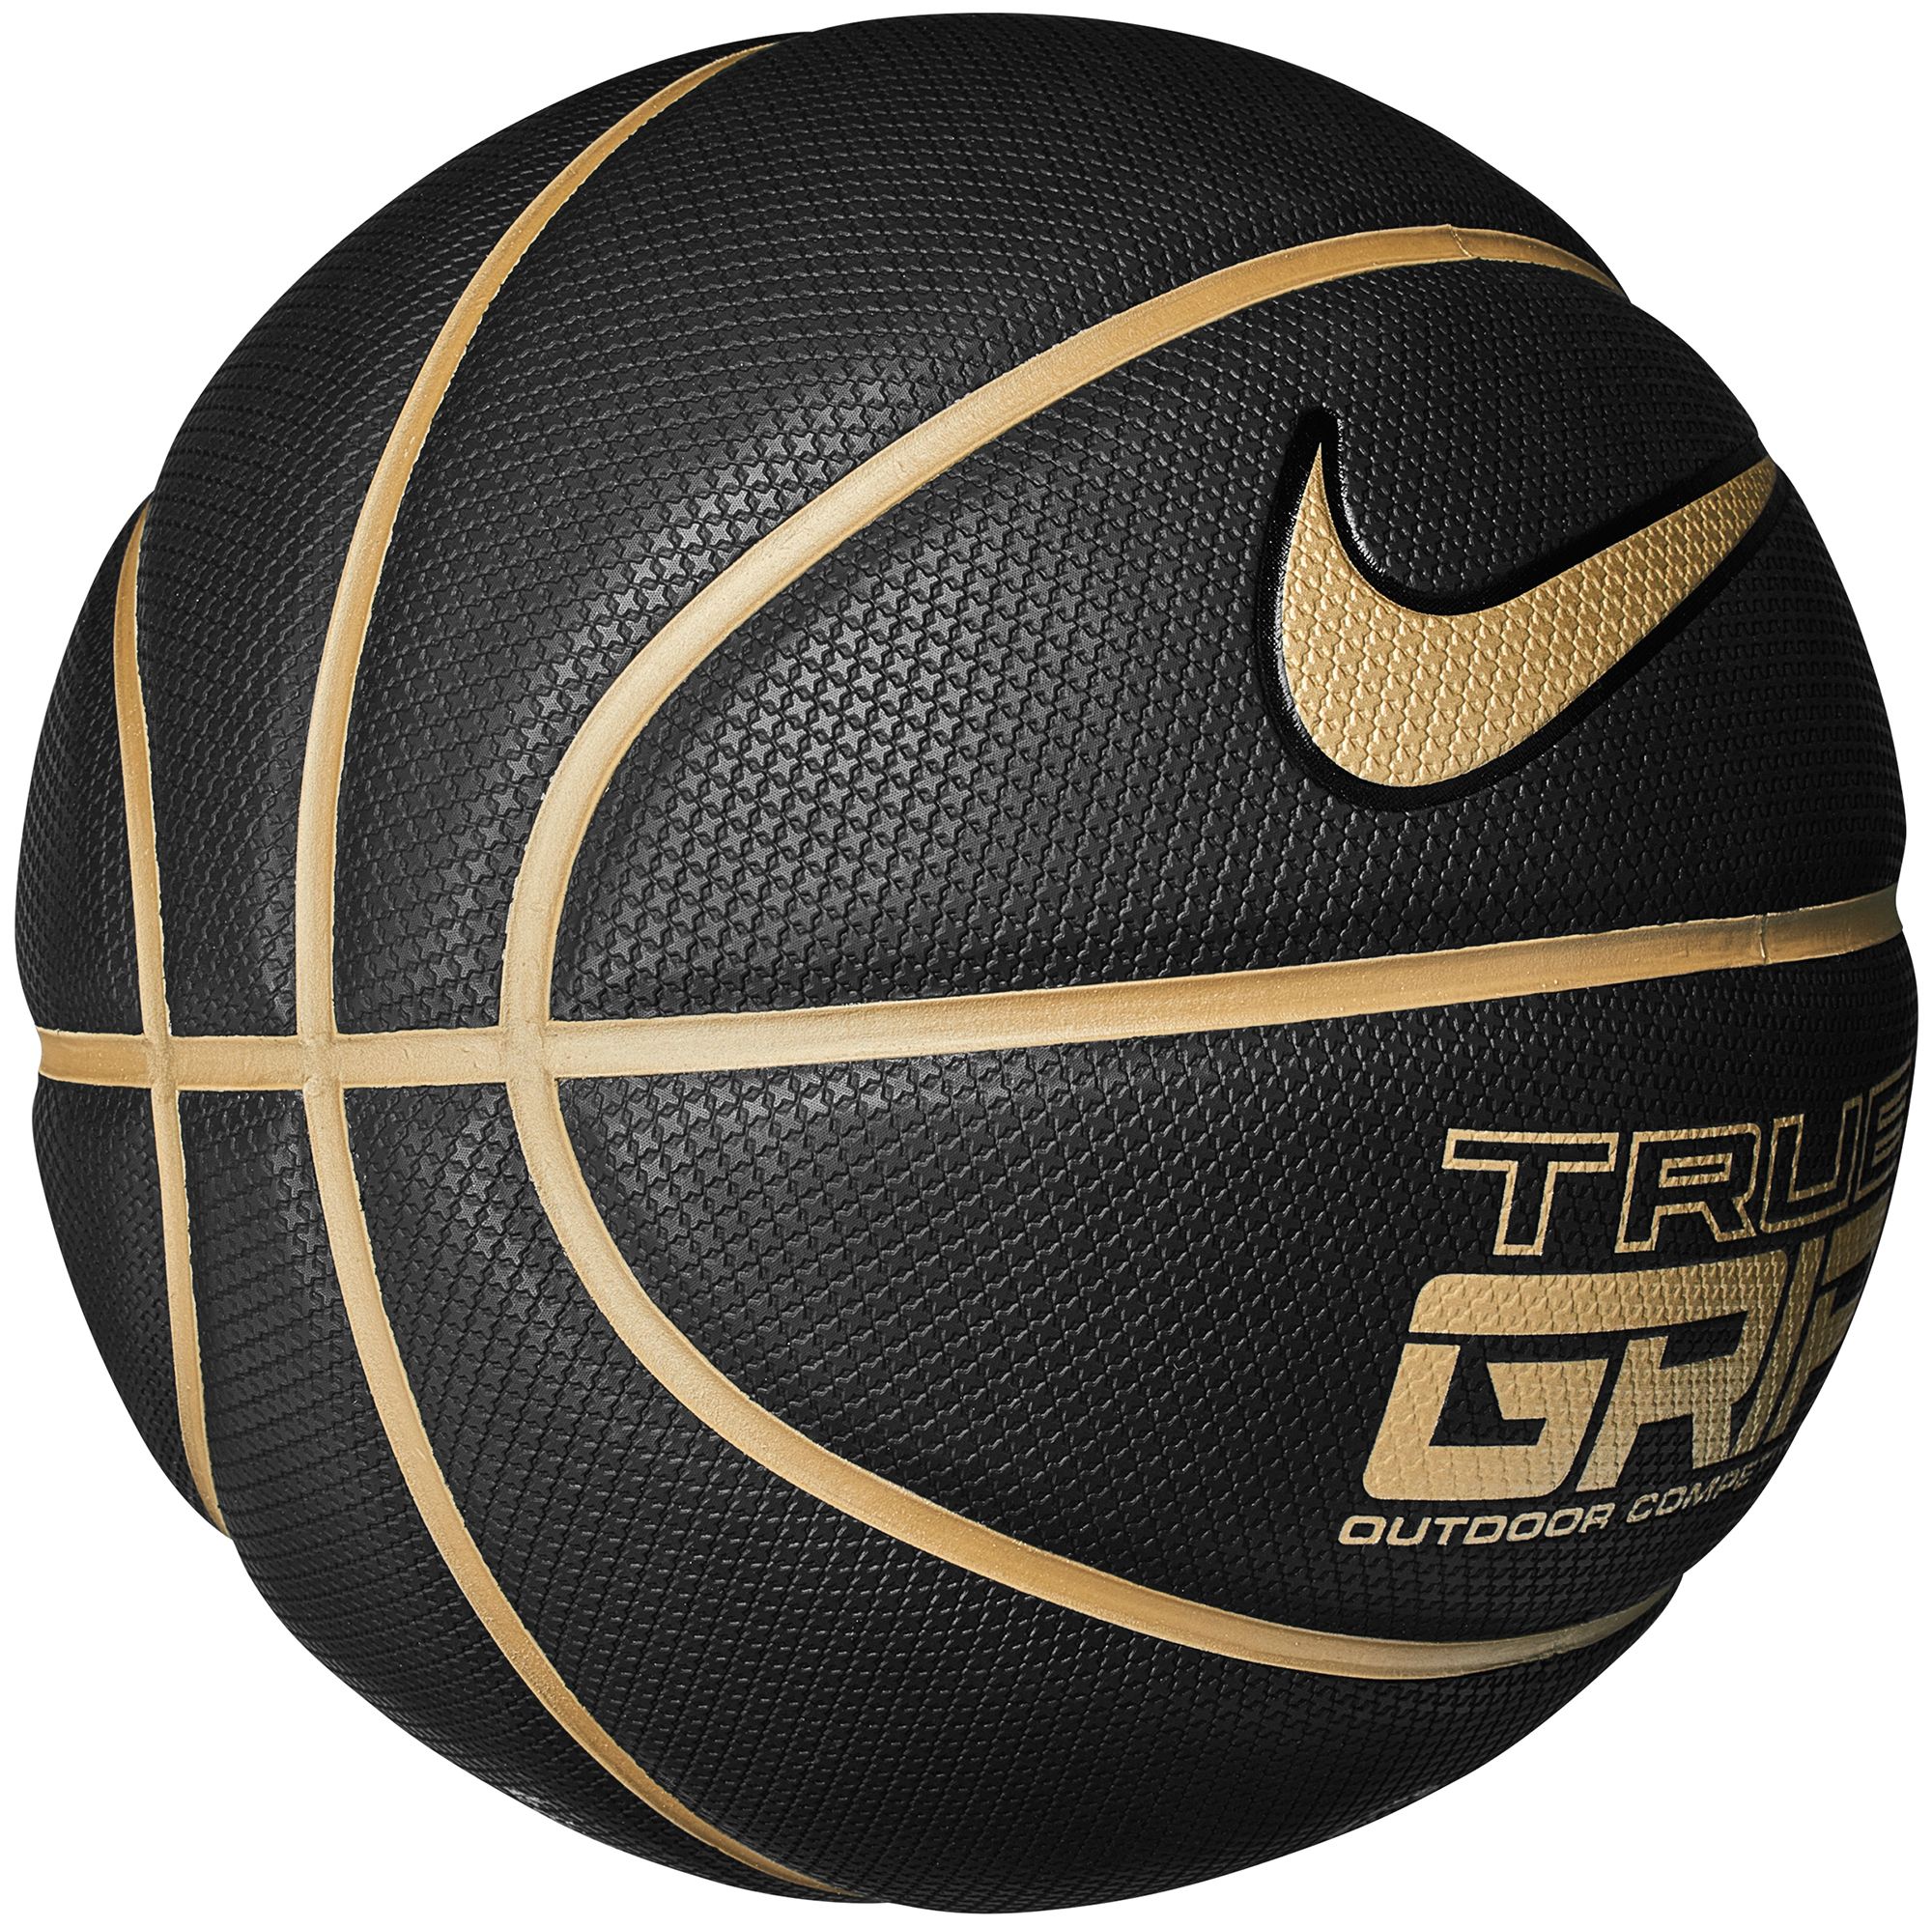 Nike True Grip Youth Basketball (27.5 